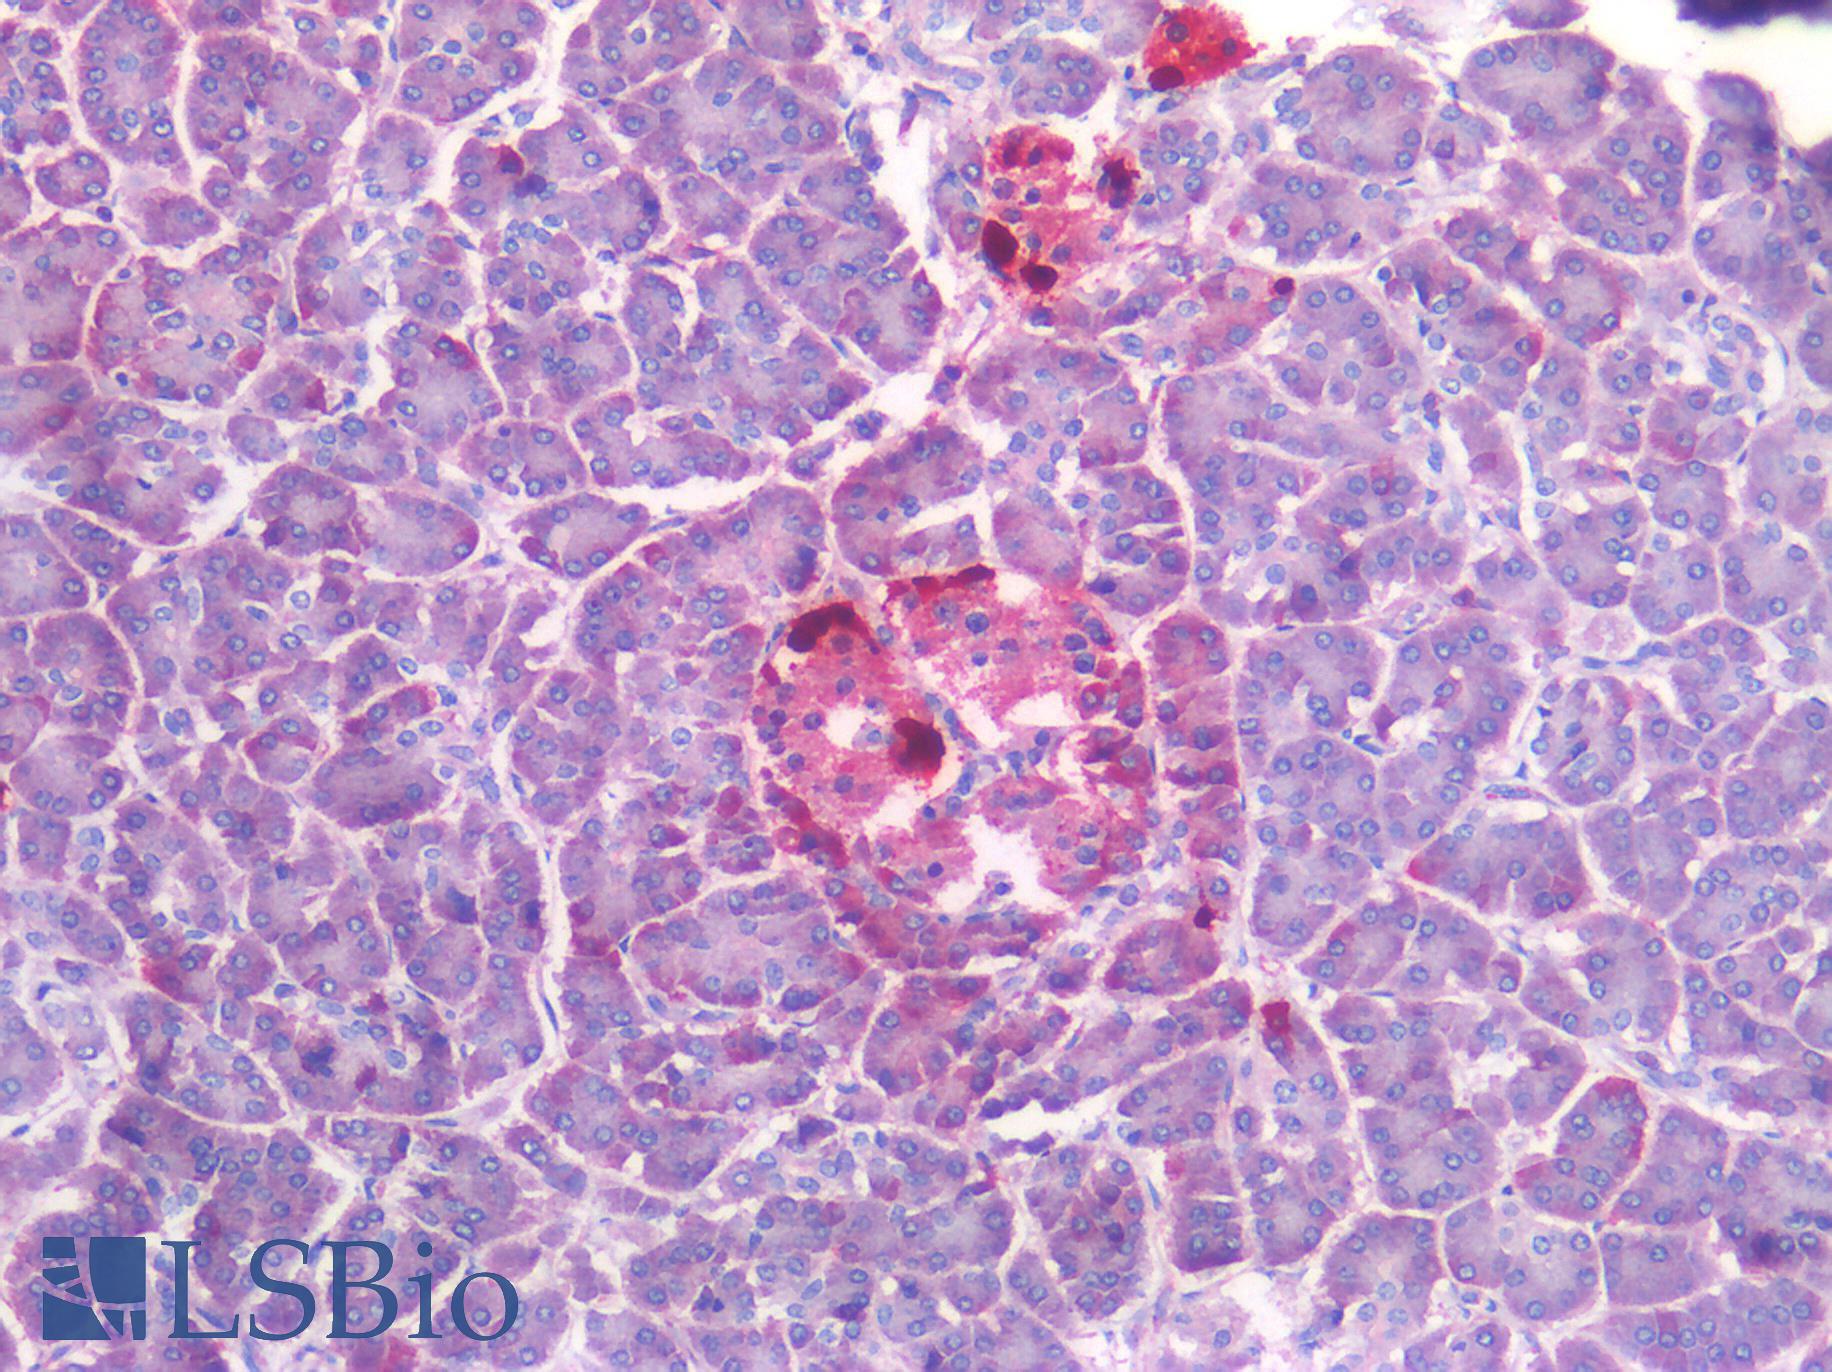 SST / Somatostatin Antibody - Human Pancreas: Formalin-Fixed, Paraffin-Embedded (FFPE)